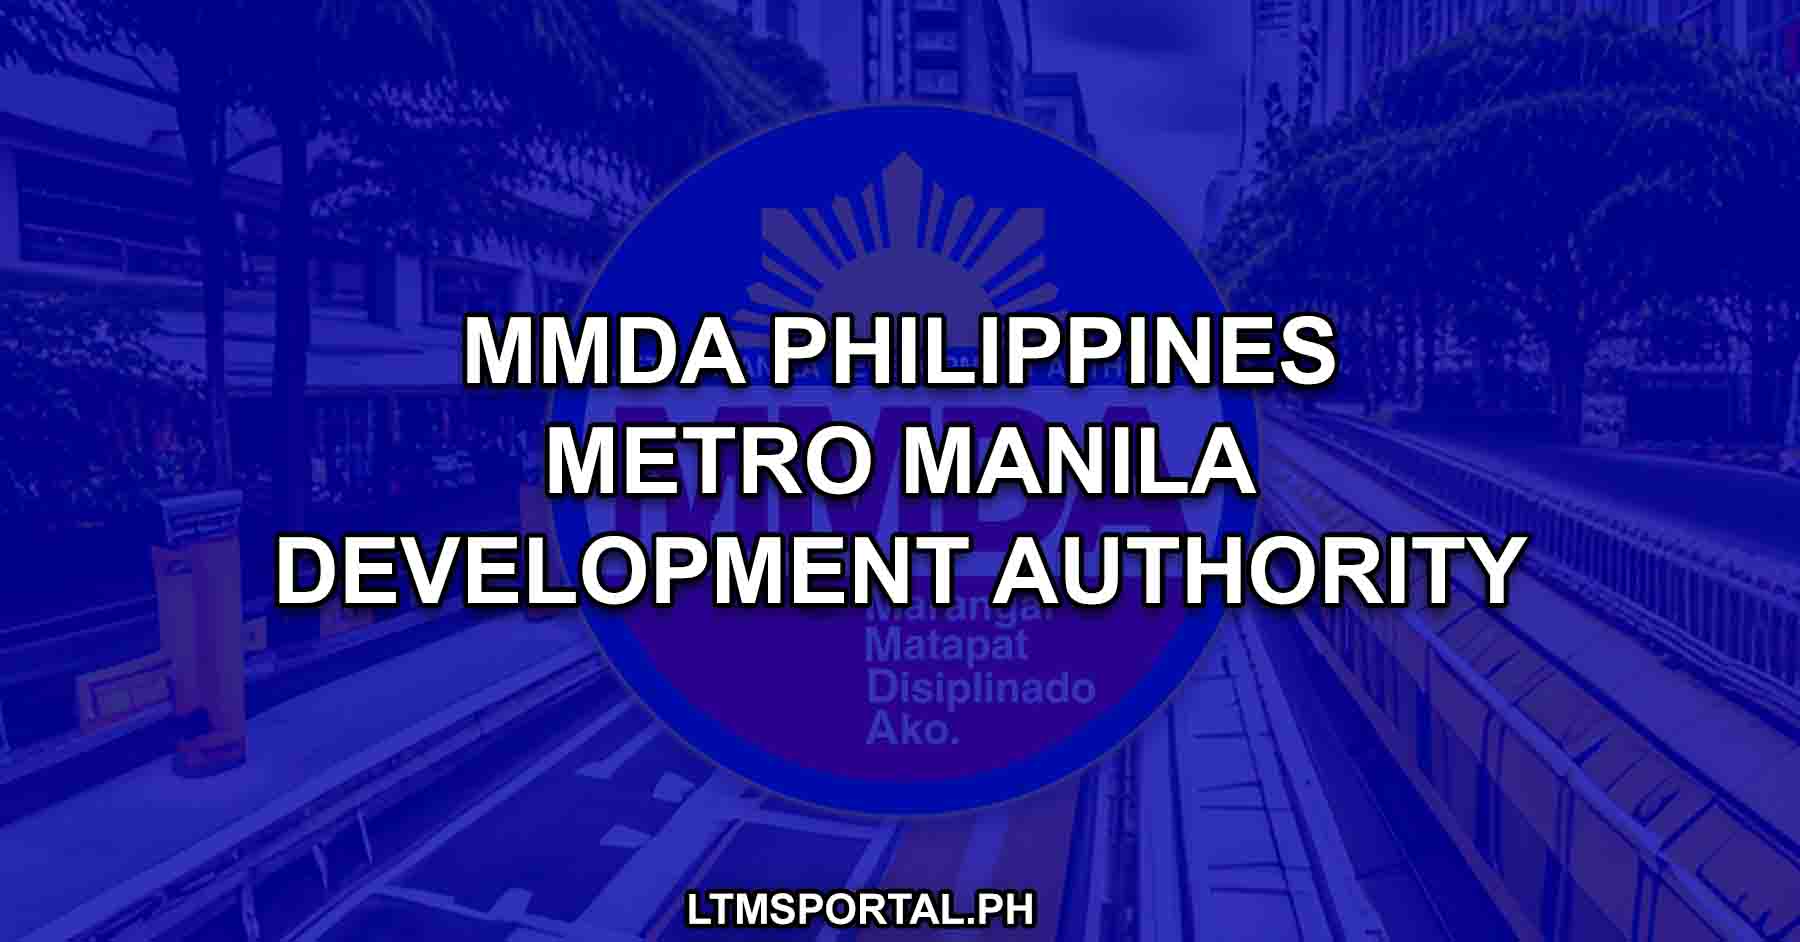 MMDA Philippines Metro Manila Development Authority office